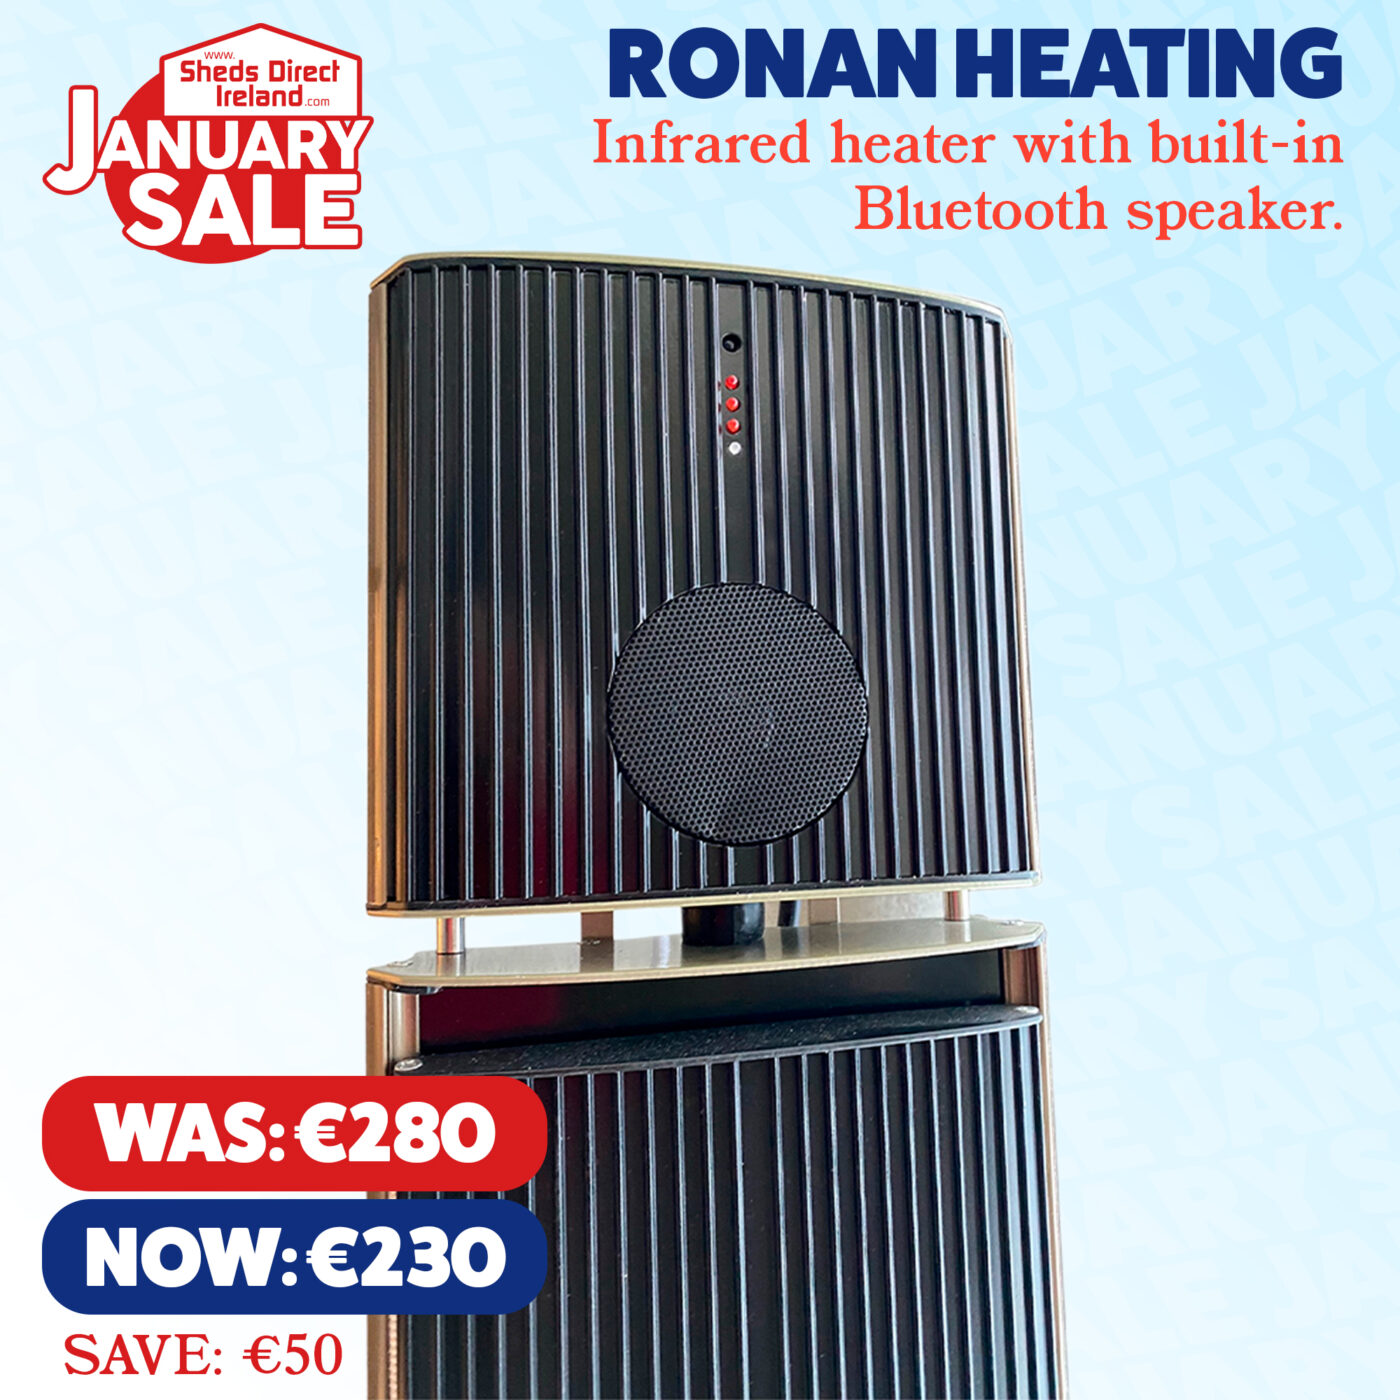 January Sale - speaker with heater